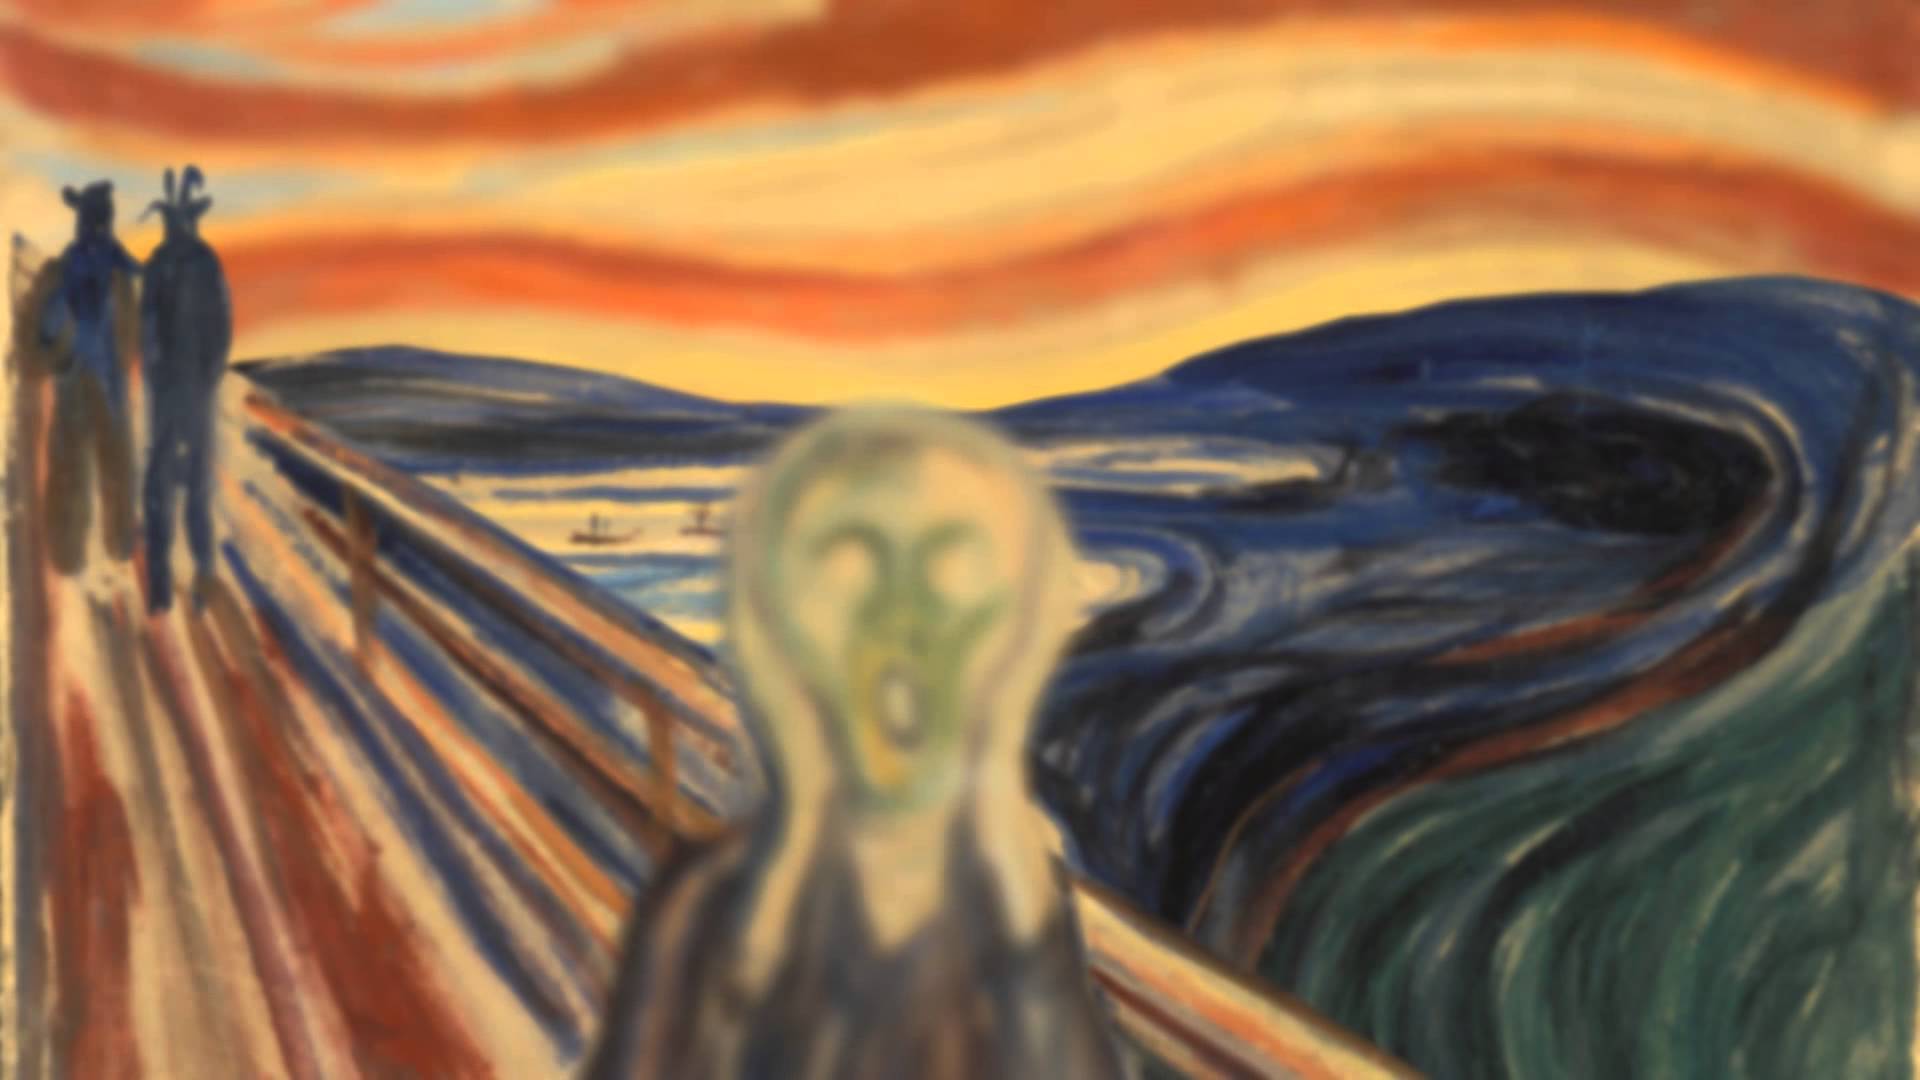 Parallax Artwork: Edvard Munch - The Scream - YouTube